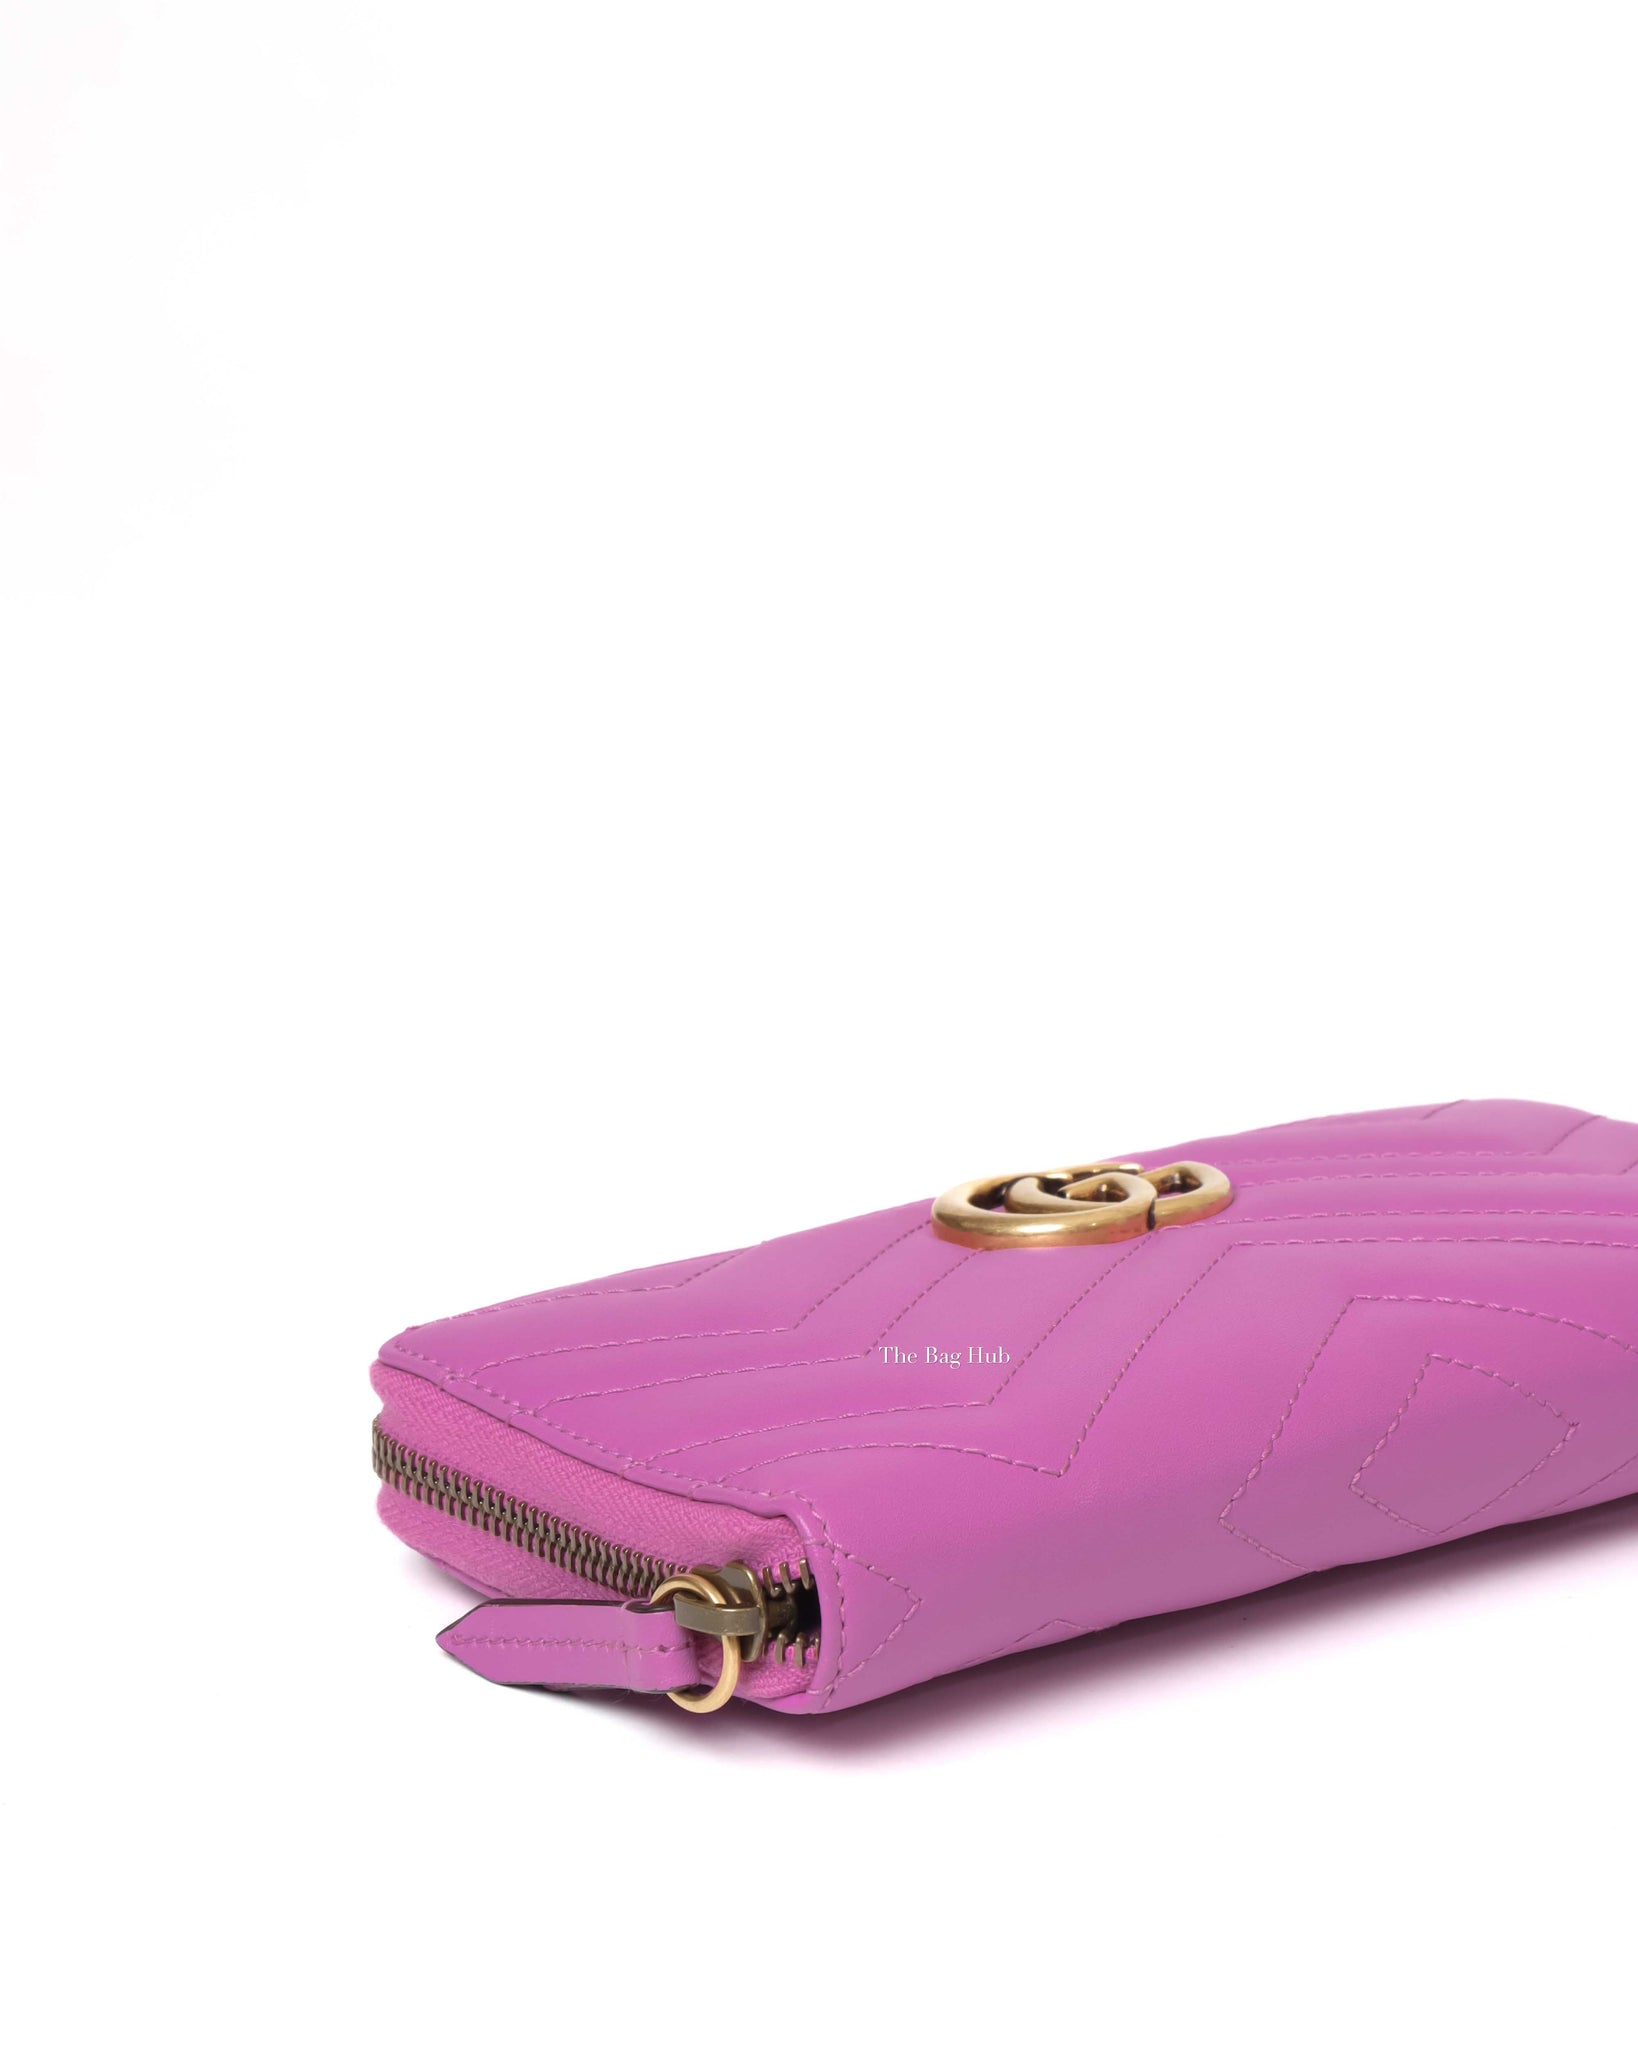 Gucci Purple Leather GG Marmont Zip Around Wallet